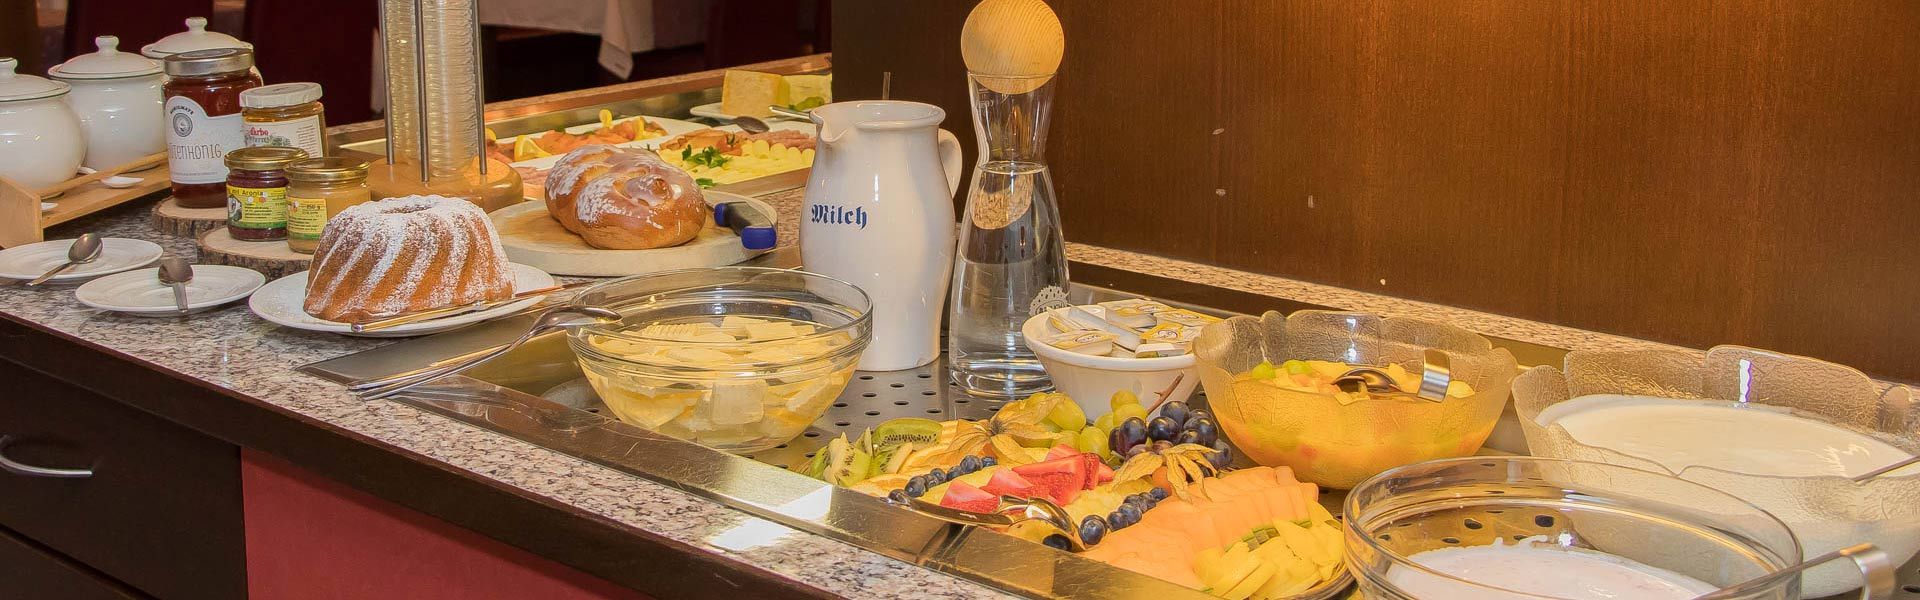 Frühstücksbuffet im Hotel Kitz in Bruck